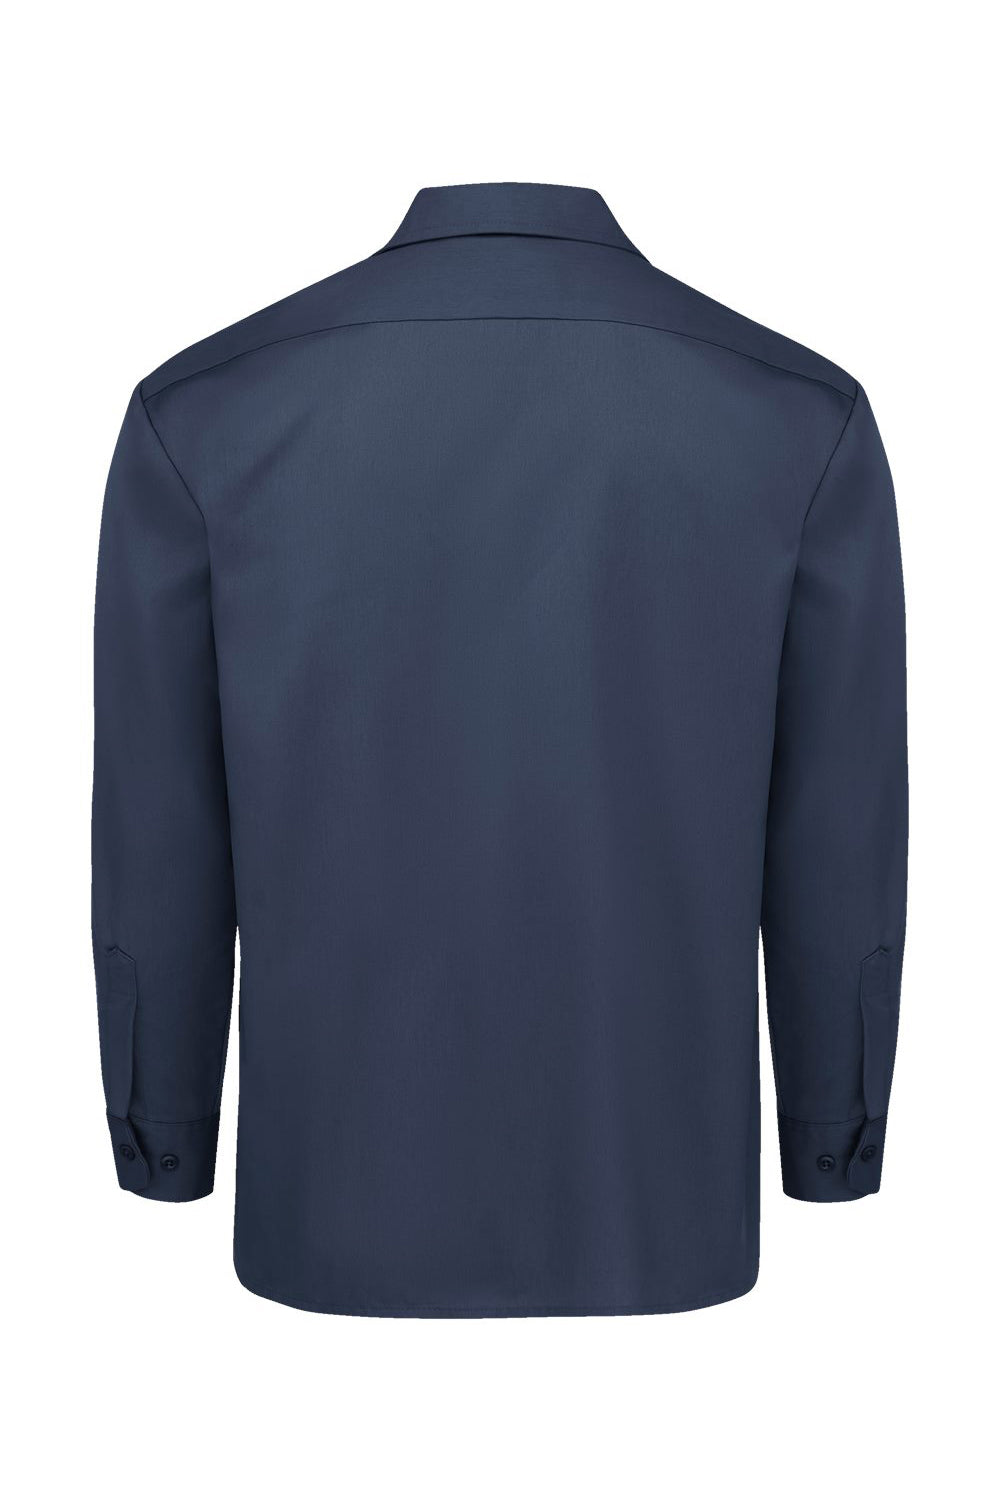 Dickies 5574 Mens Moisture Wicking Long Sleeve Button Down Work Shirt w/ Double Pockets Dark Navy Blue Flat Back